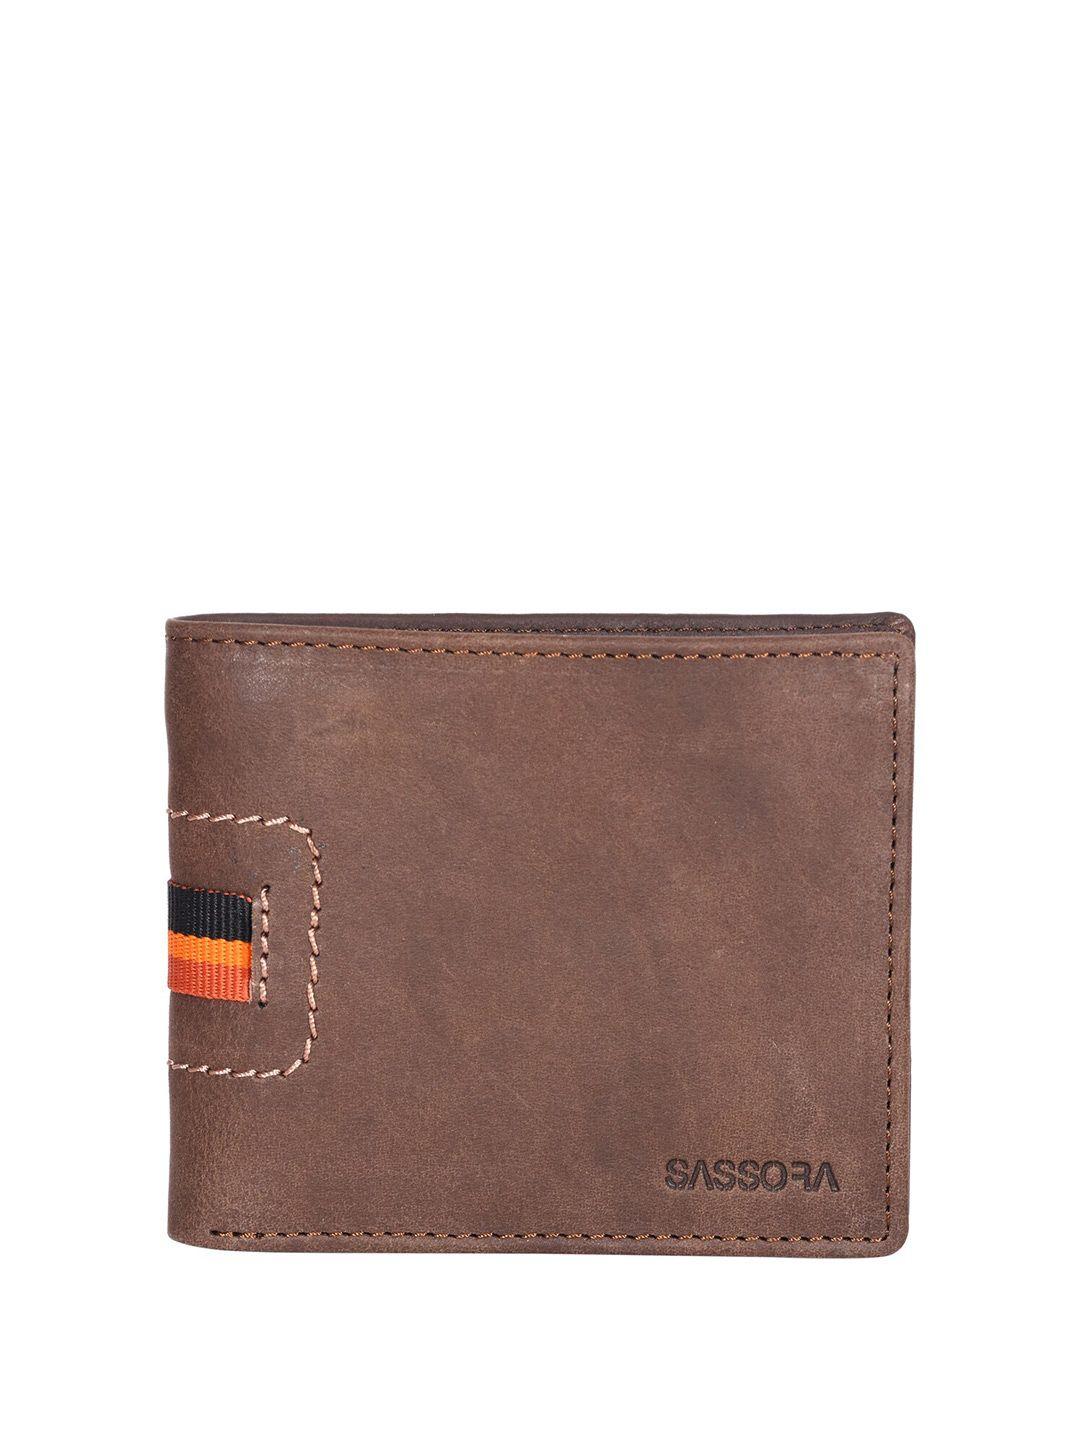 sassora unisex leather rfid two fold wallet